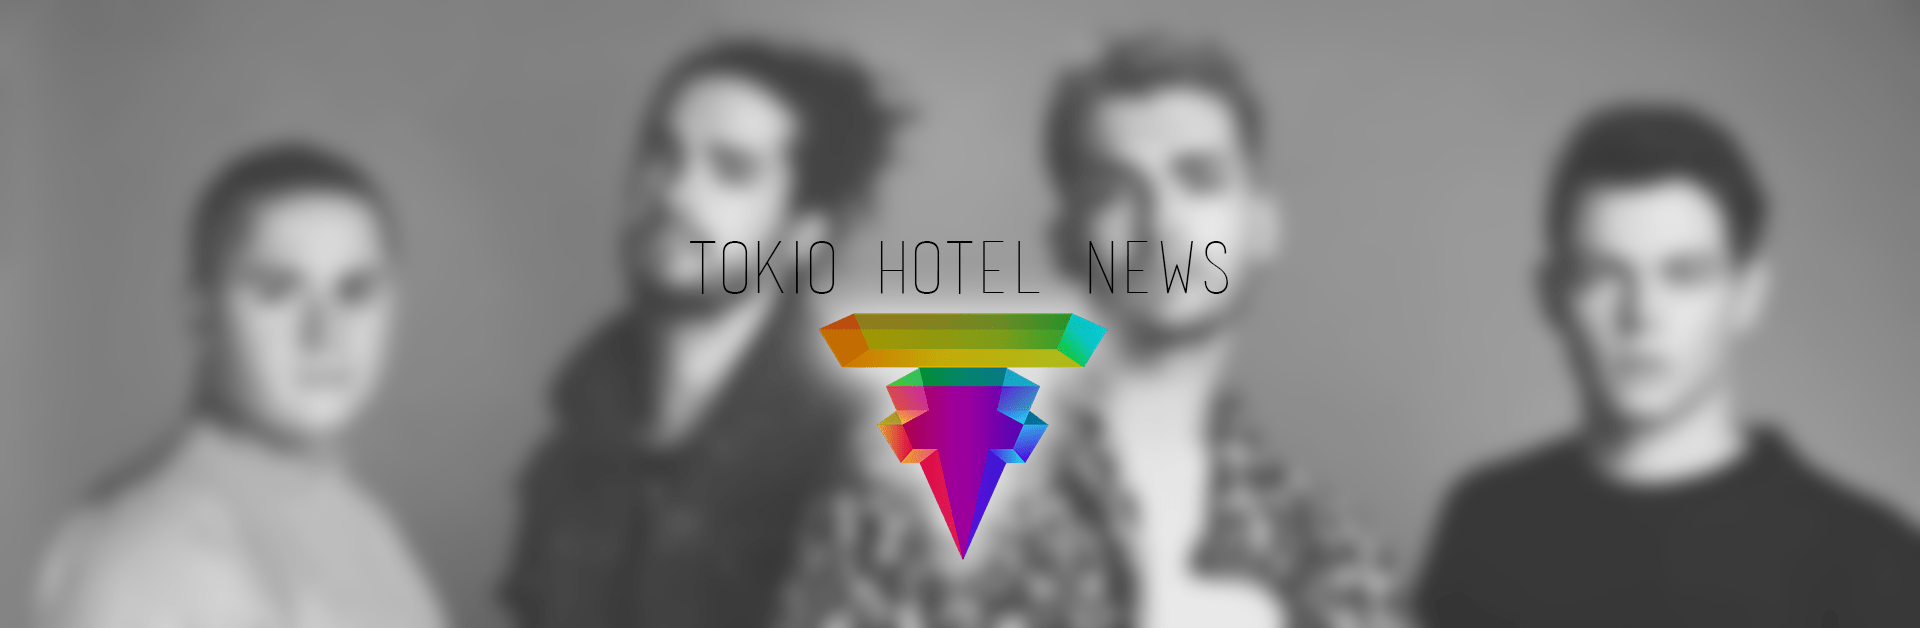 tokyo hotel news logo